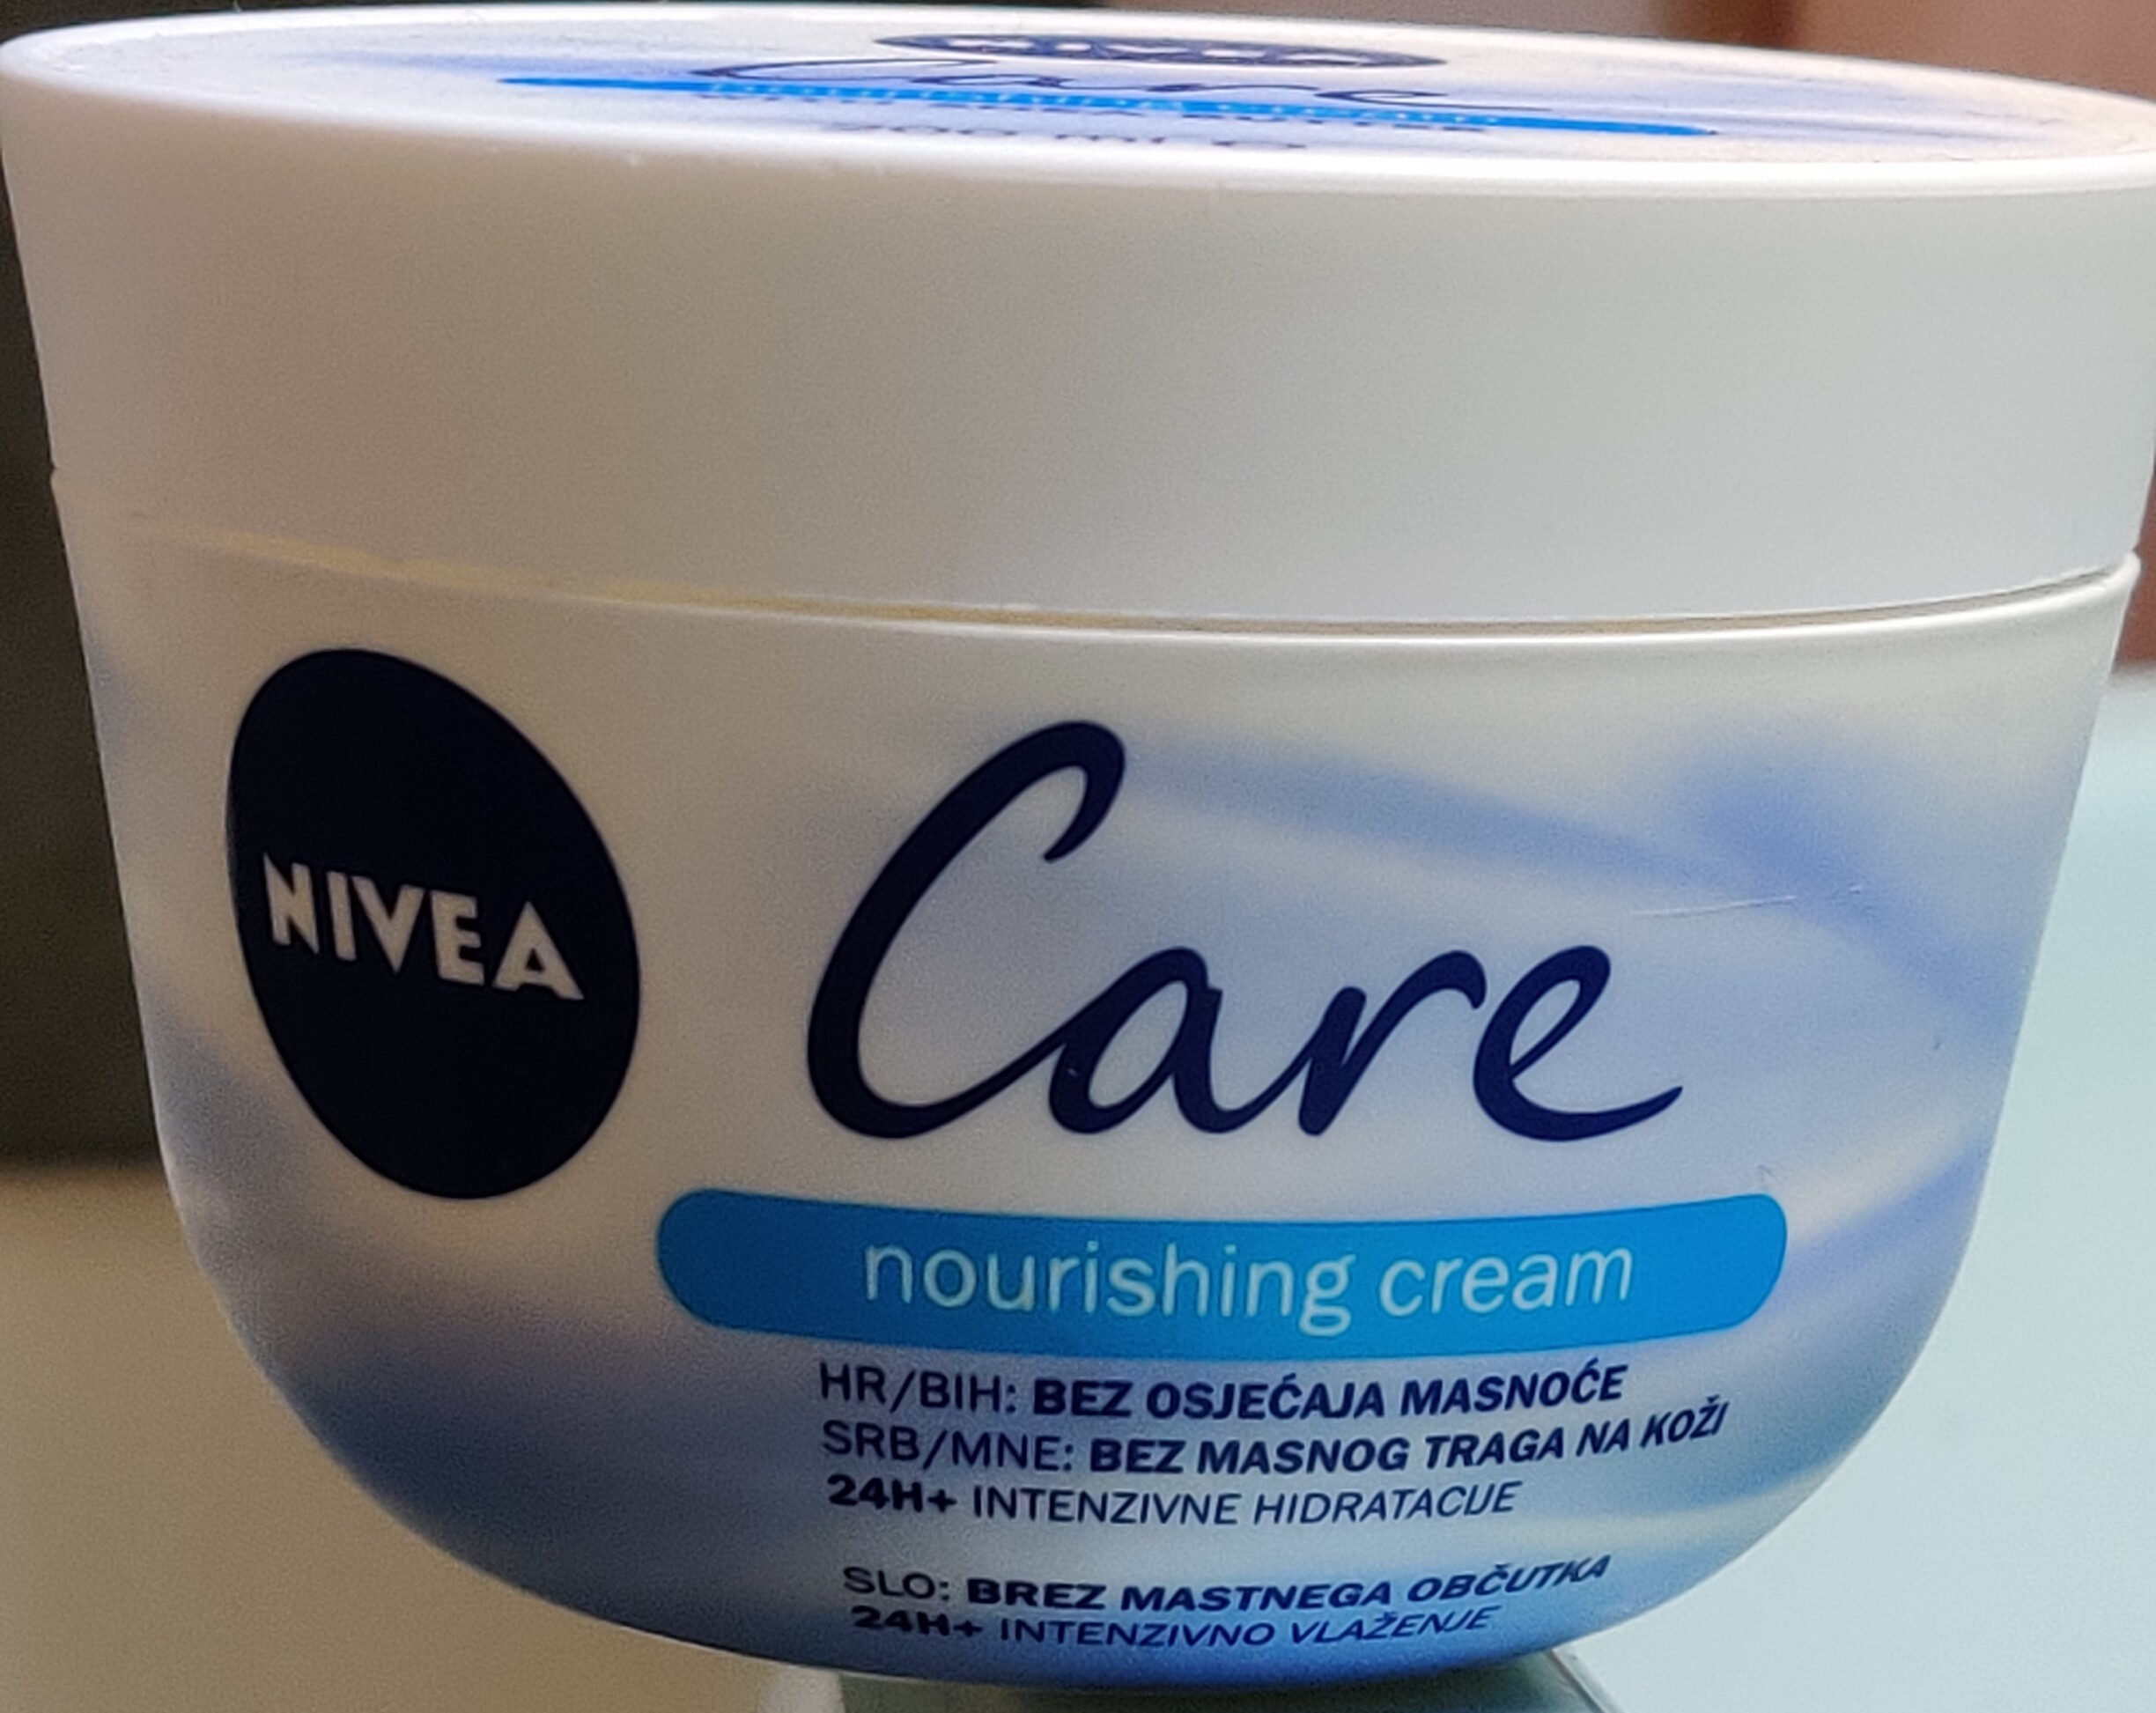 Care Nourishing Cream - Product - en